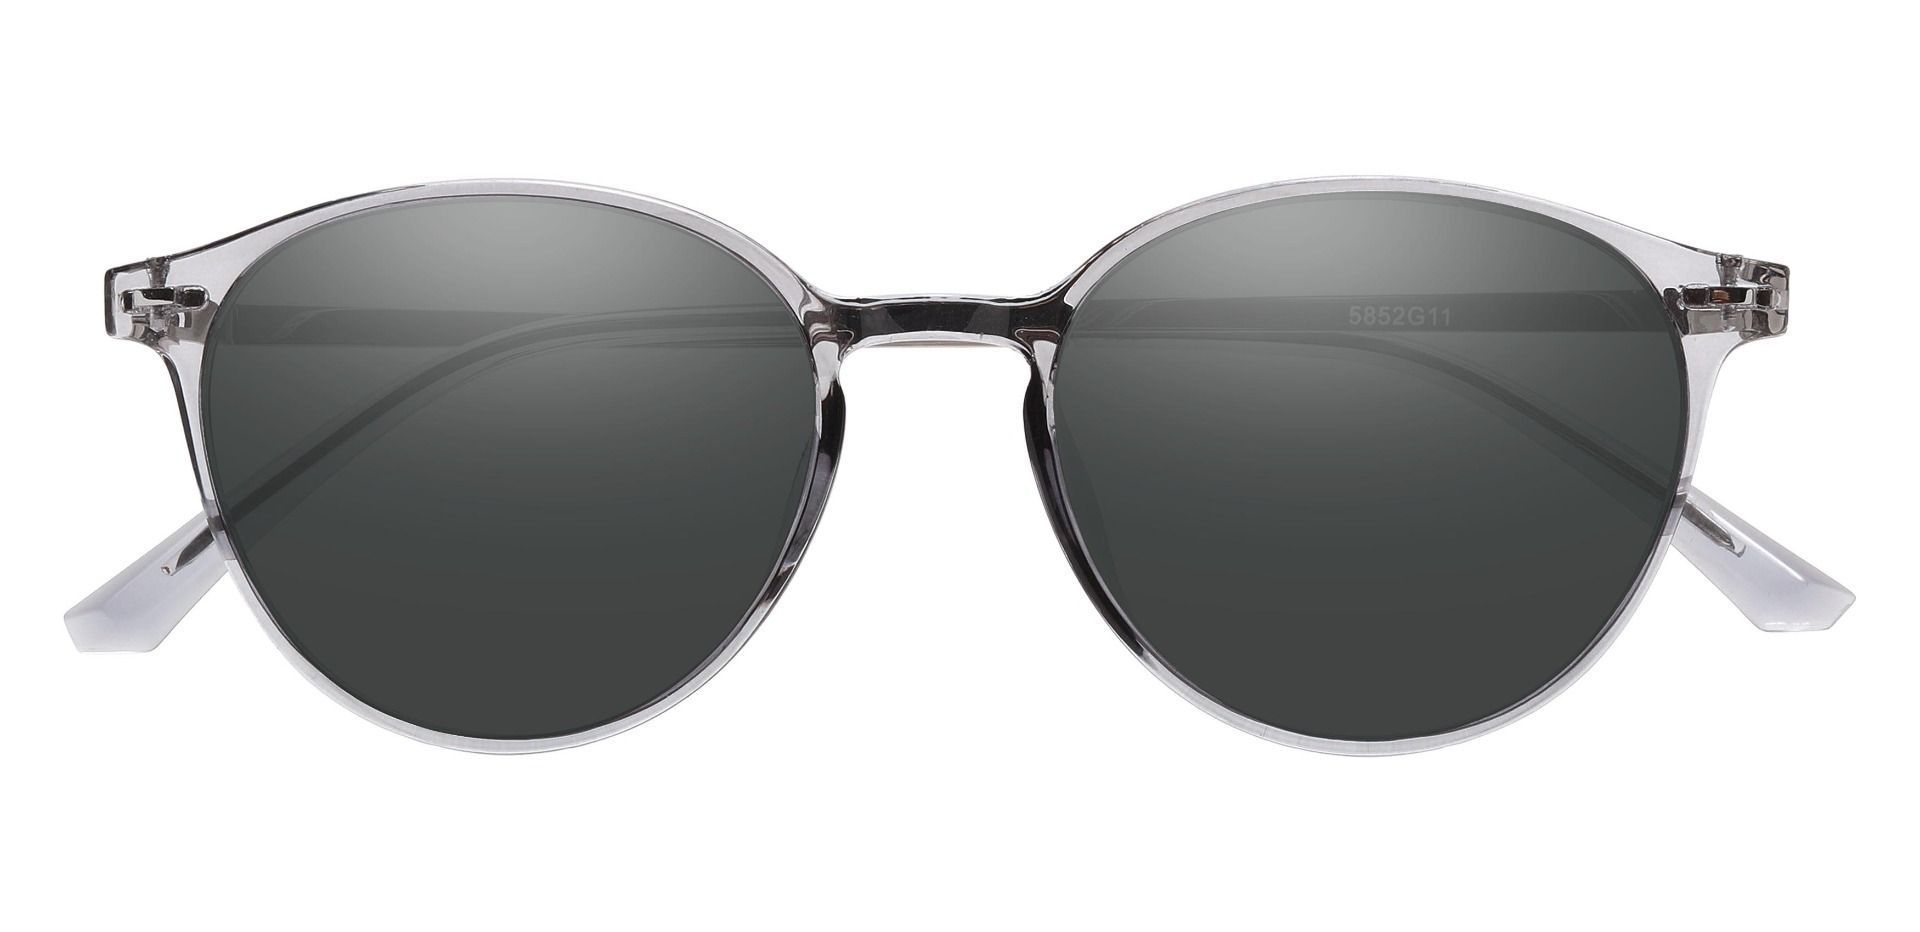 Springer Round Non-Rx Sunglasses - Gray Frame With Gray Lenses